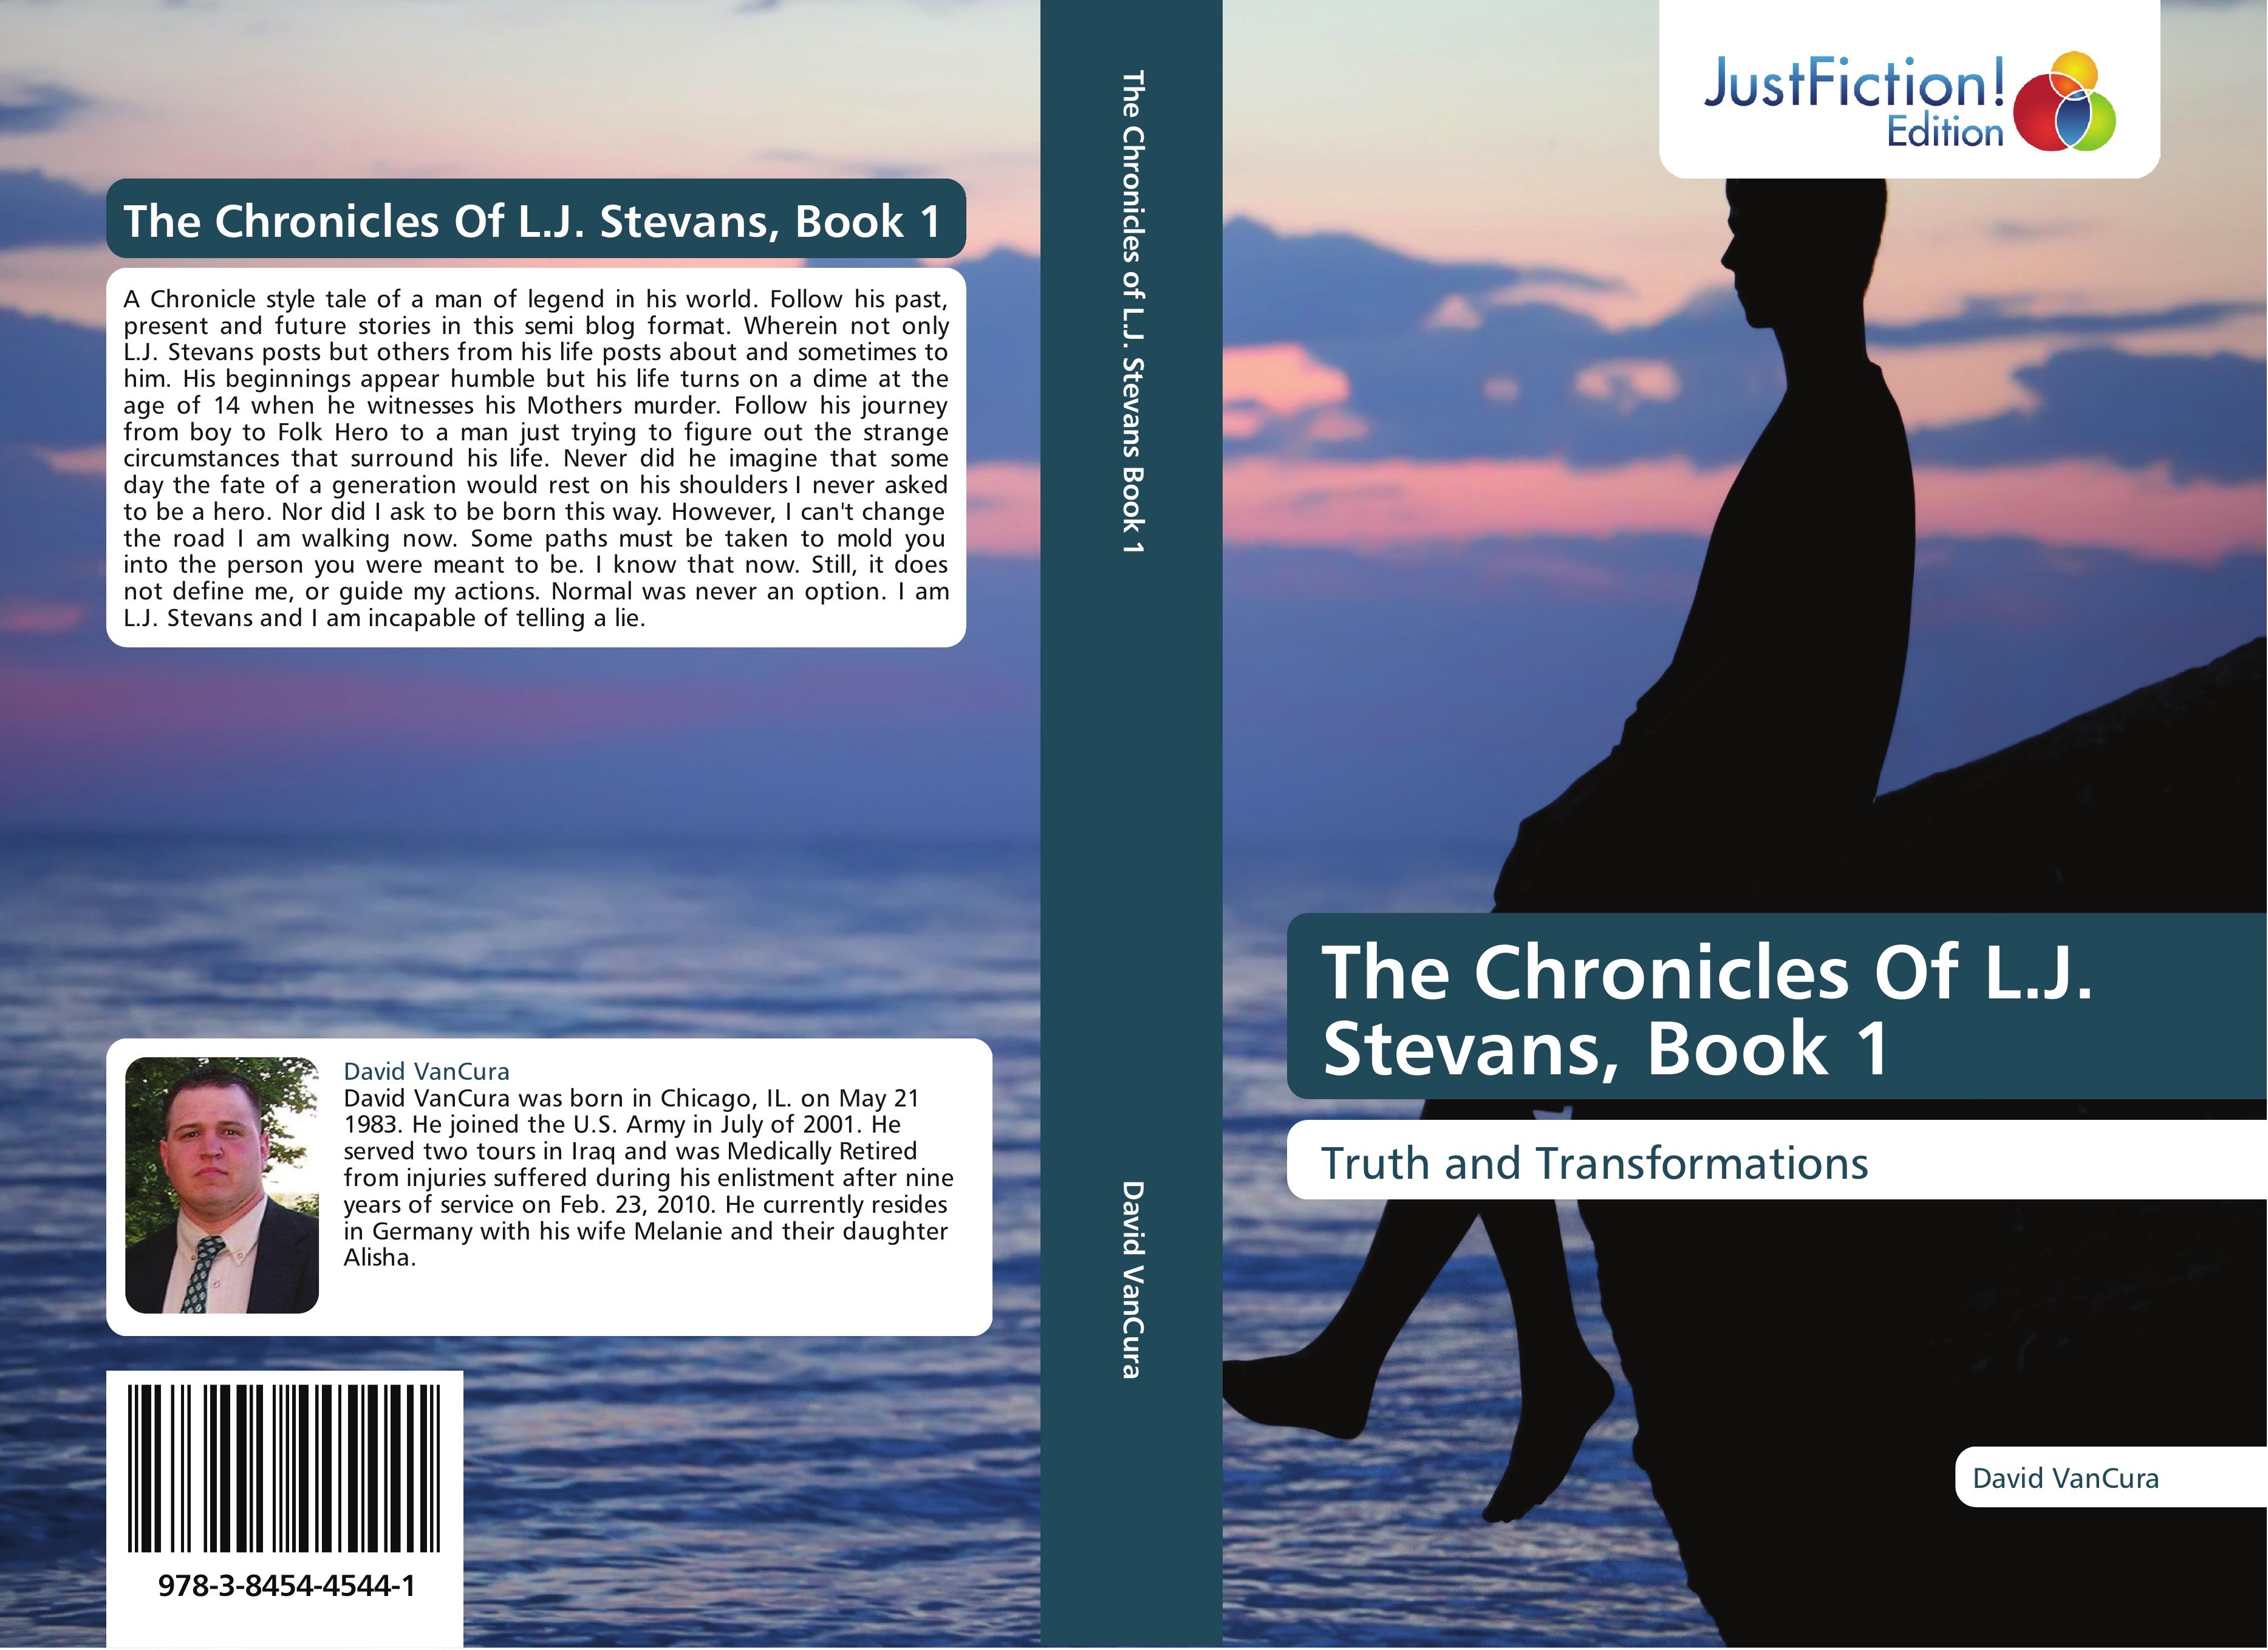 The Chronicles Of L.J. Stevans, Book 1 - David VanCura